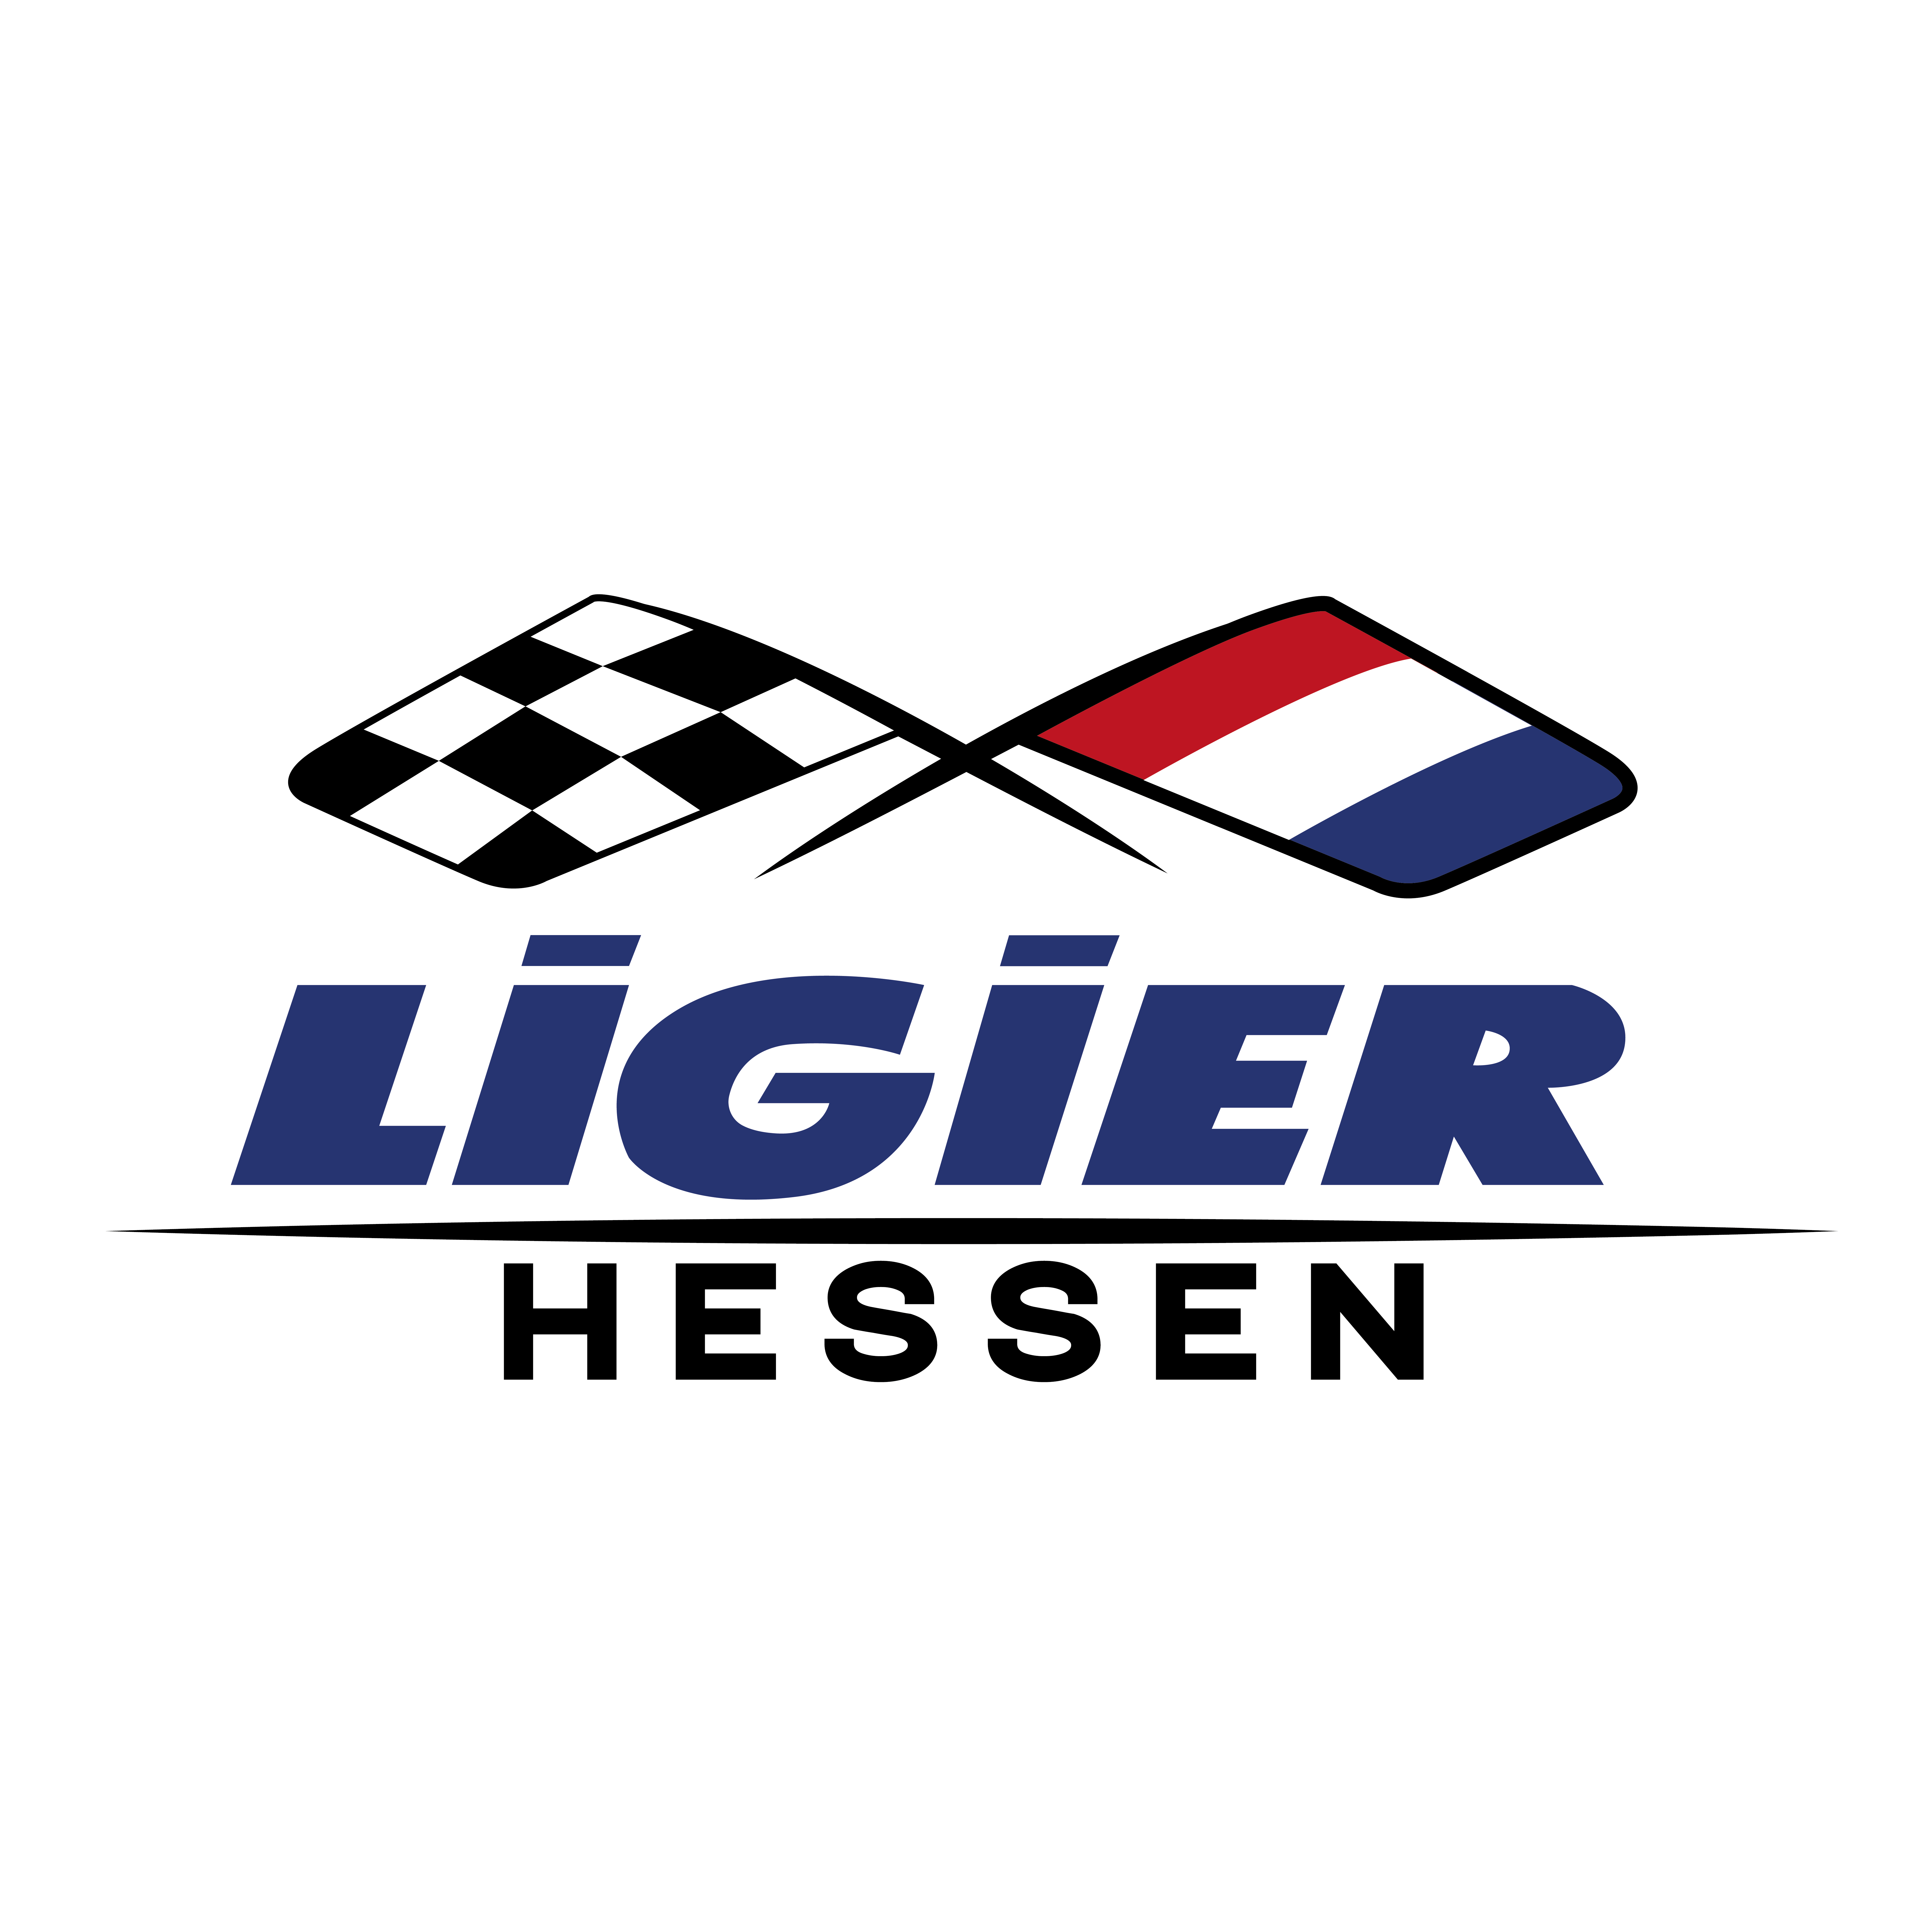 Ligier Hessen Logo v003_Background